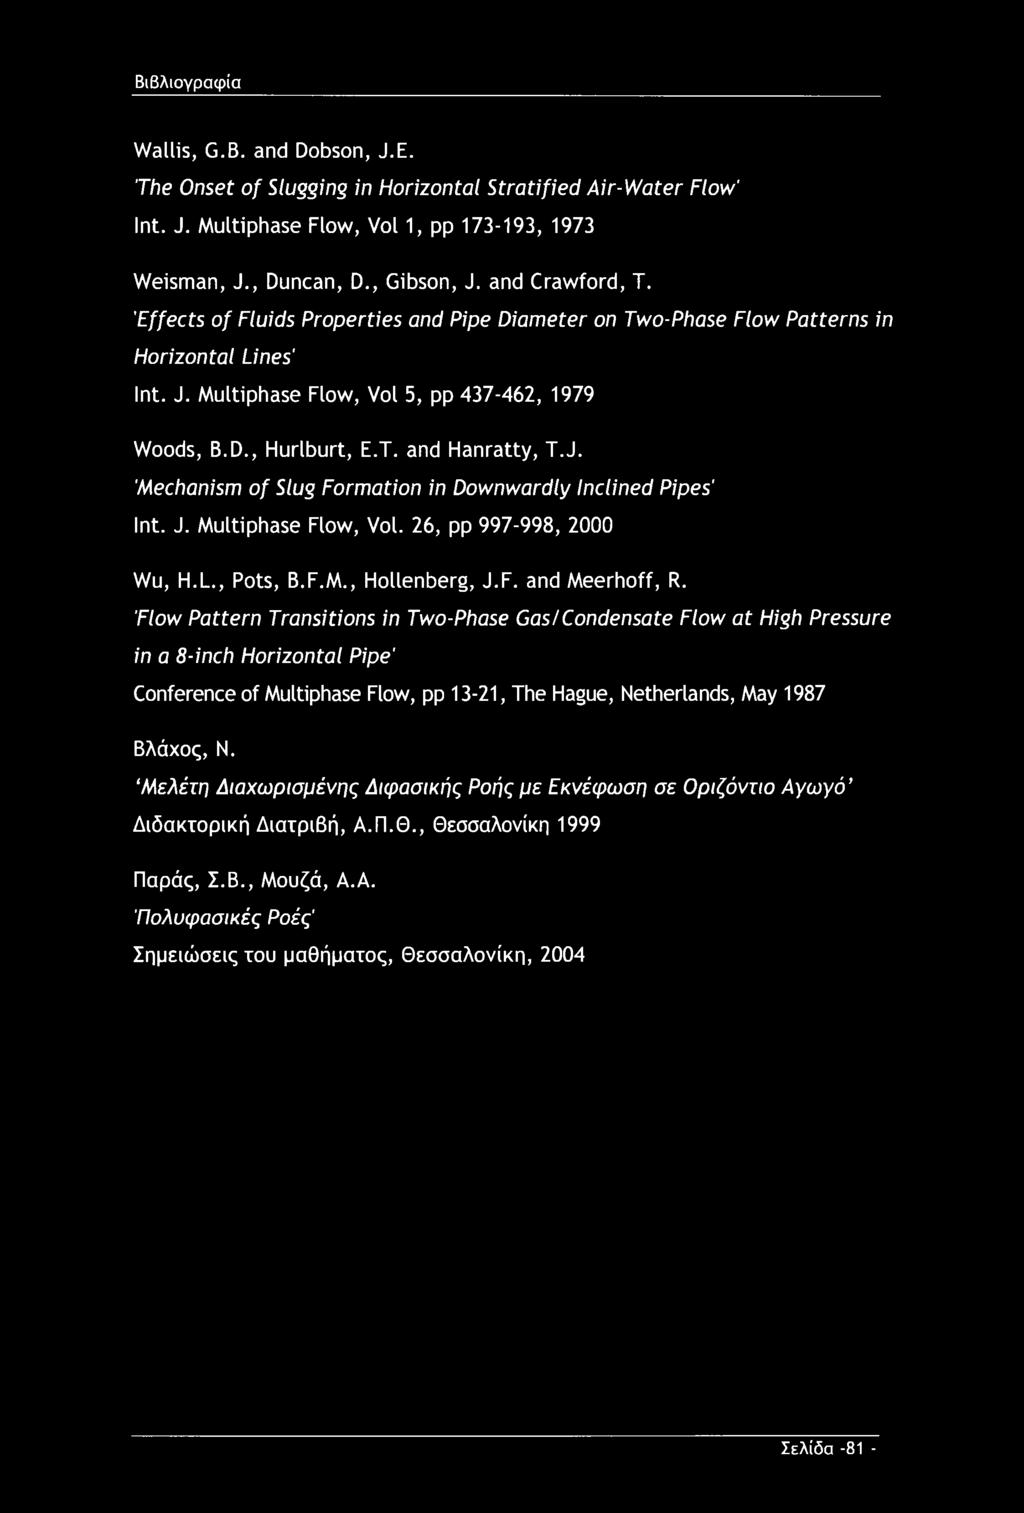 J. 'Mechanism of Slug Formation in Downwardly Inclined Pipes' Int. J. Multiphase Flow, Vol. 26, pp 997-998, 2000 Wu, H.L., Pots, B.F.M., Hollenberg, J.F. and Meerhoff, R.